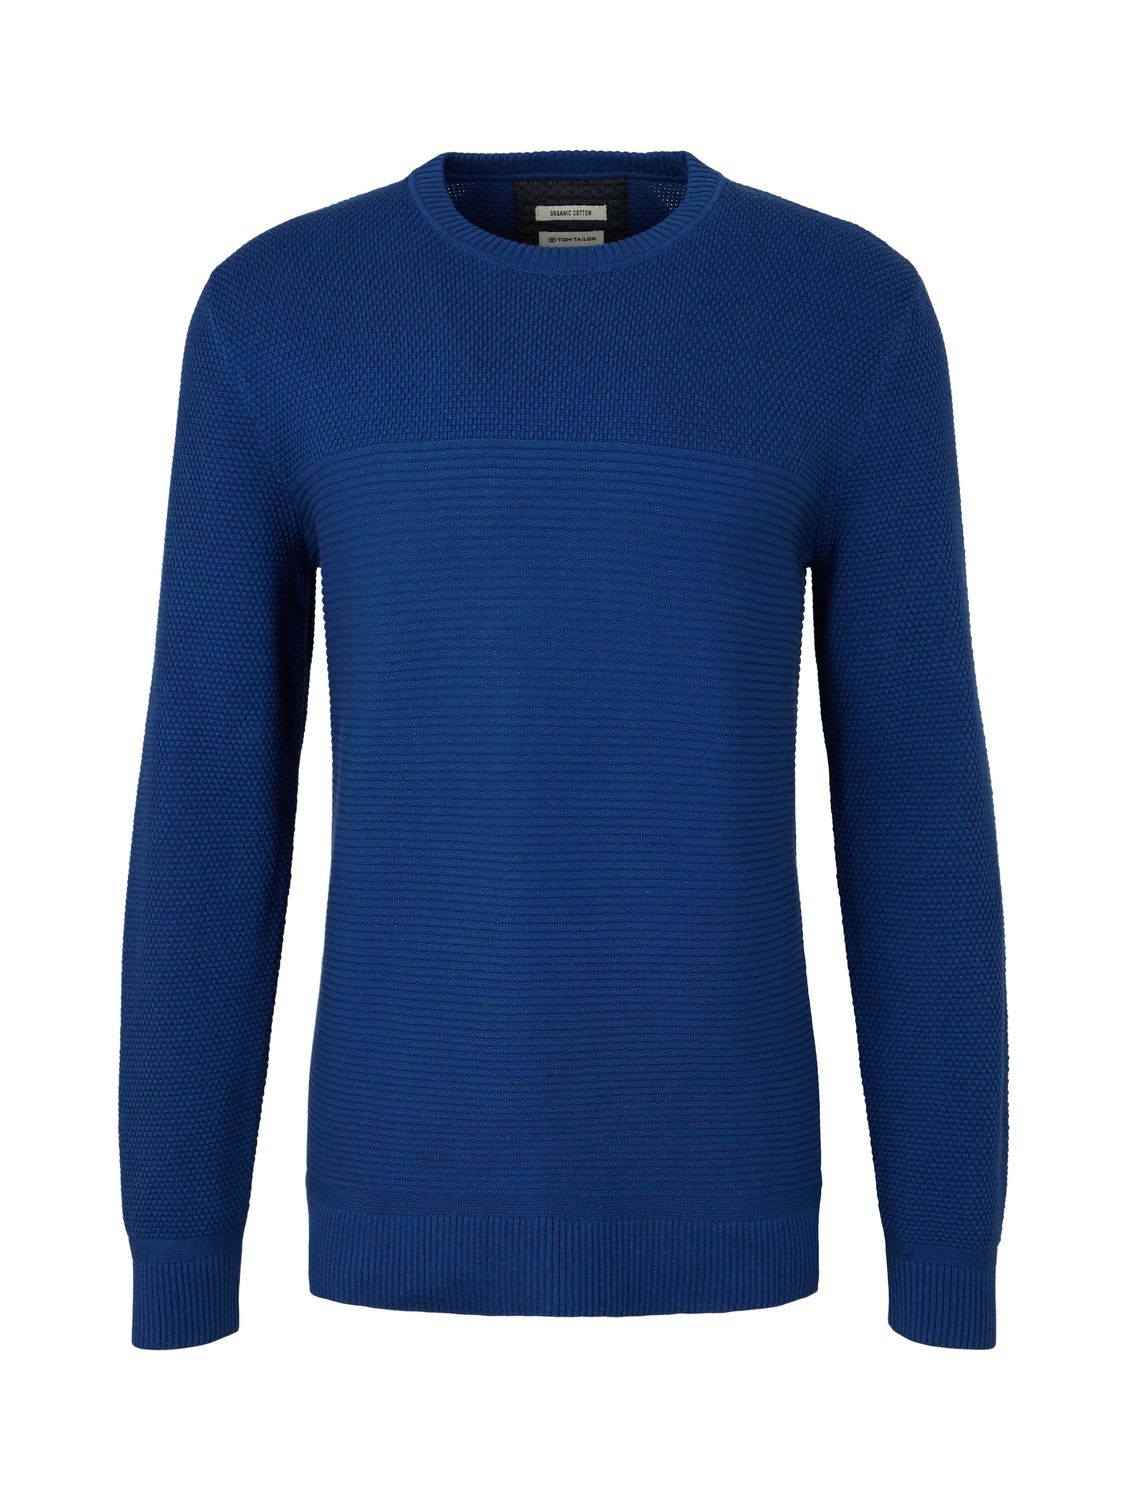 Пуловер Tom Tailor BASIC STRUCTURED, синий пуловер tom tailor denim structured doublelayer синий